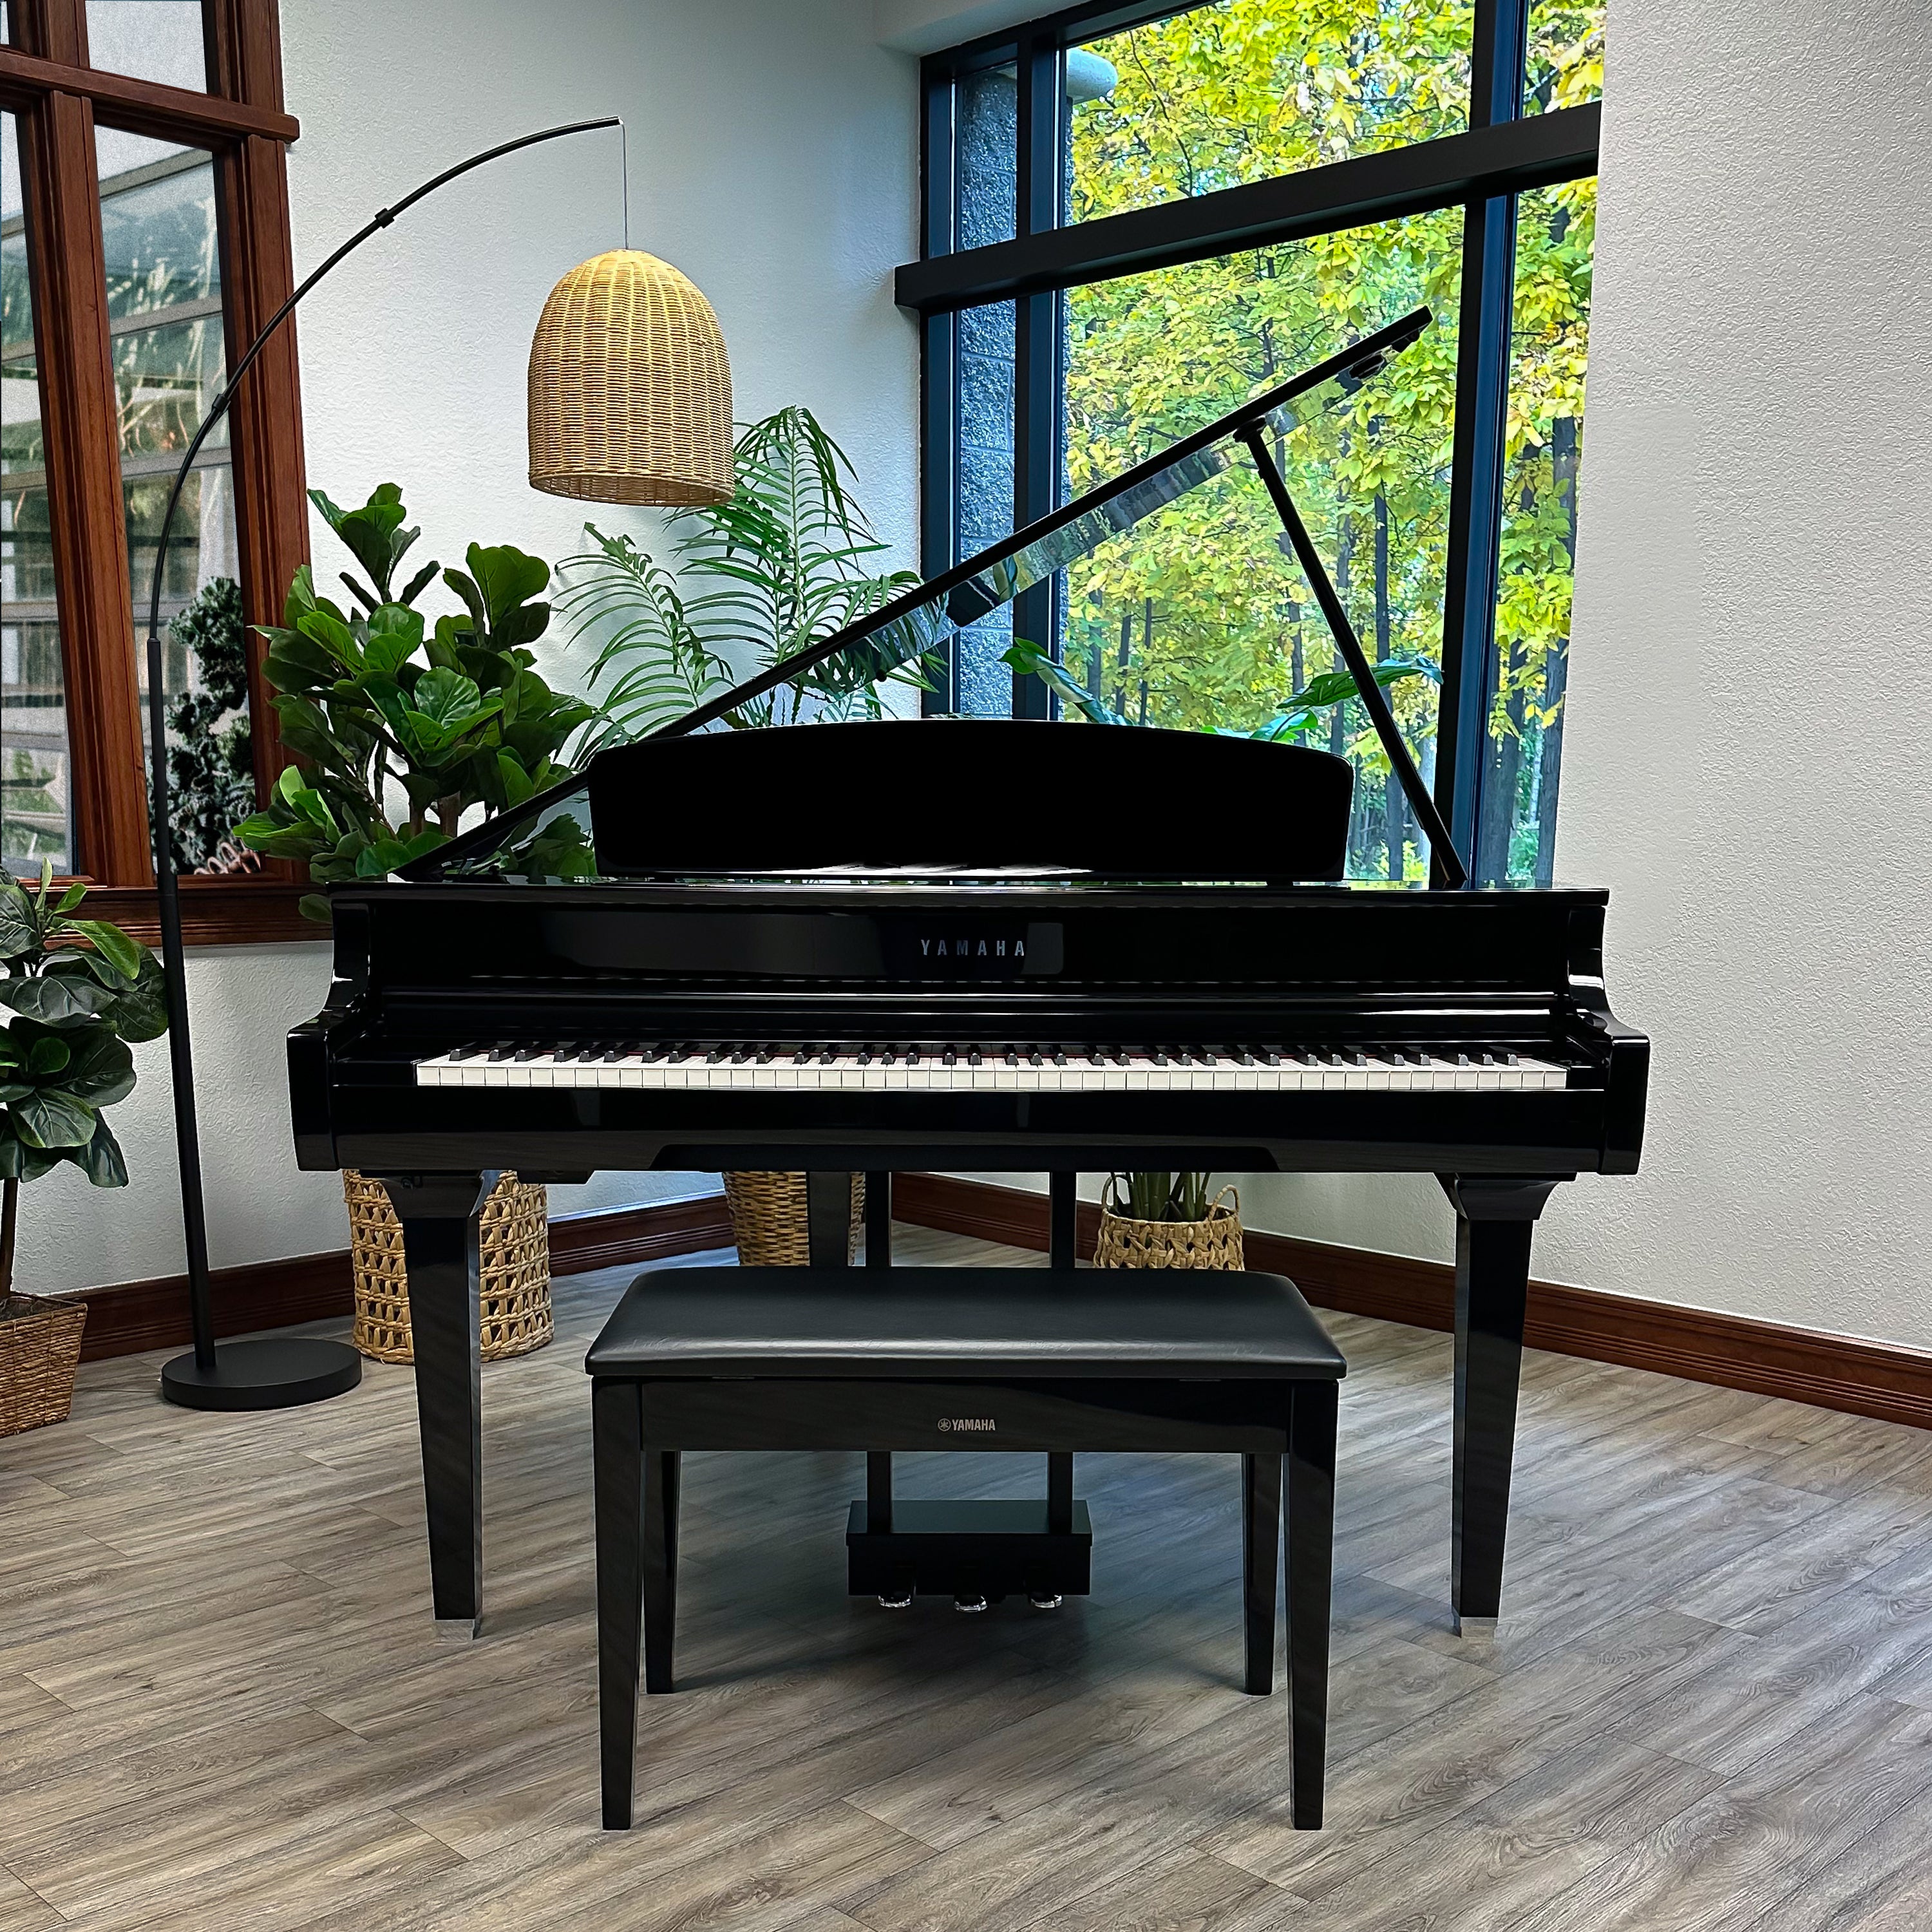 Yamaha Clavinova CLP-795GP Digital Piano - Polished Ebony - front view in a stylish living room